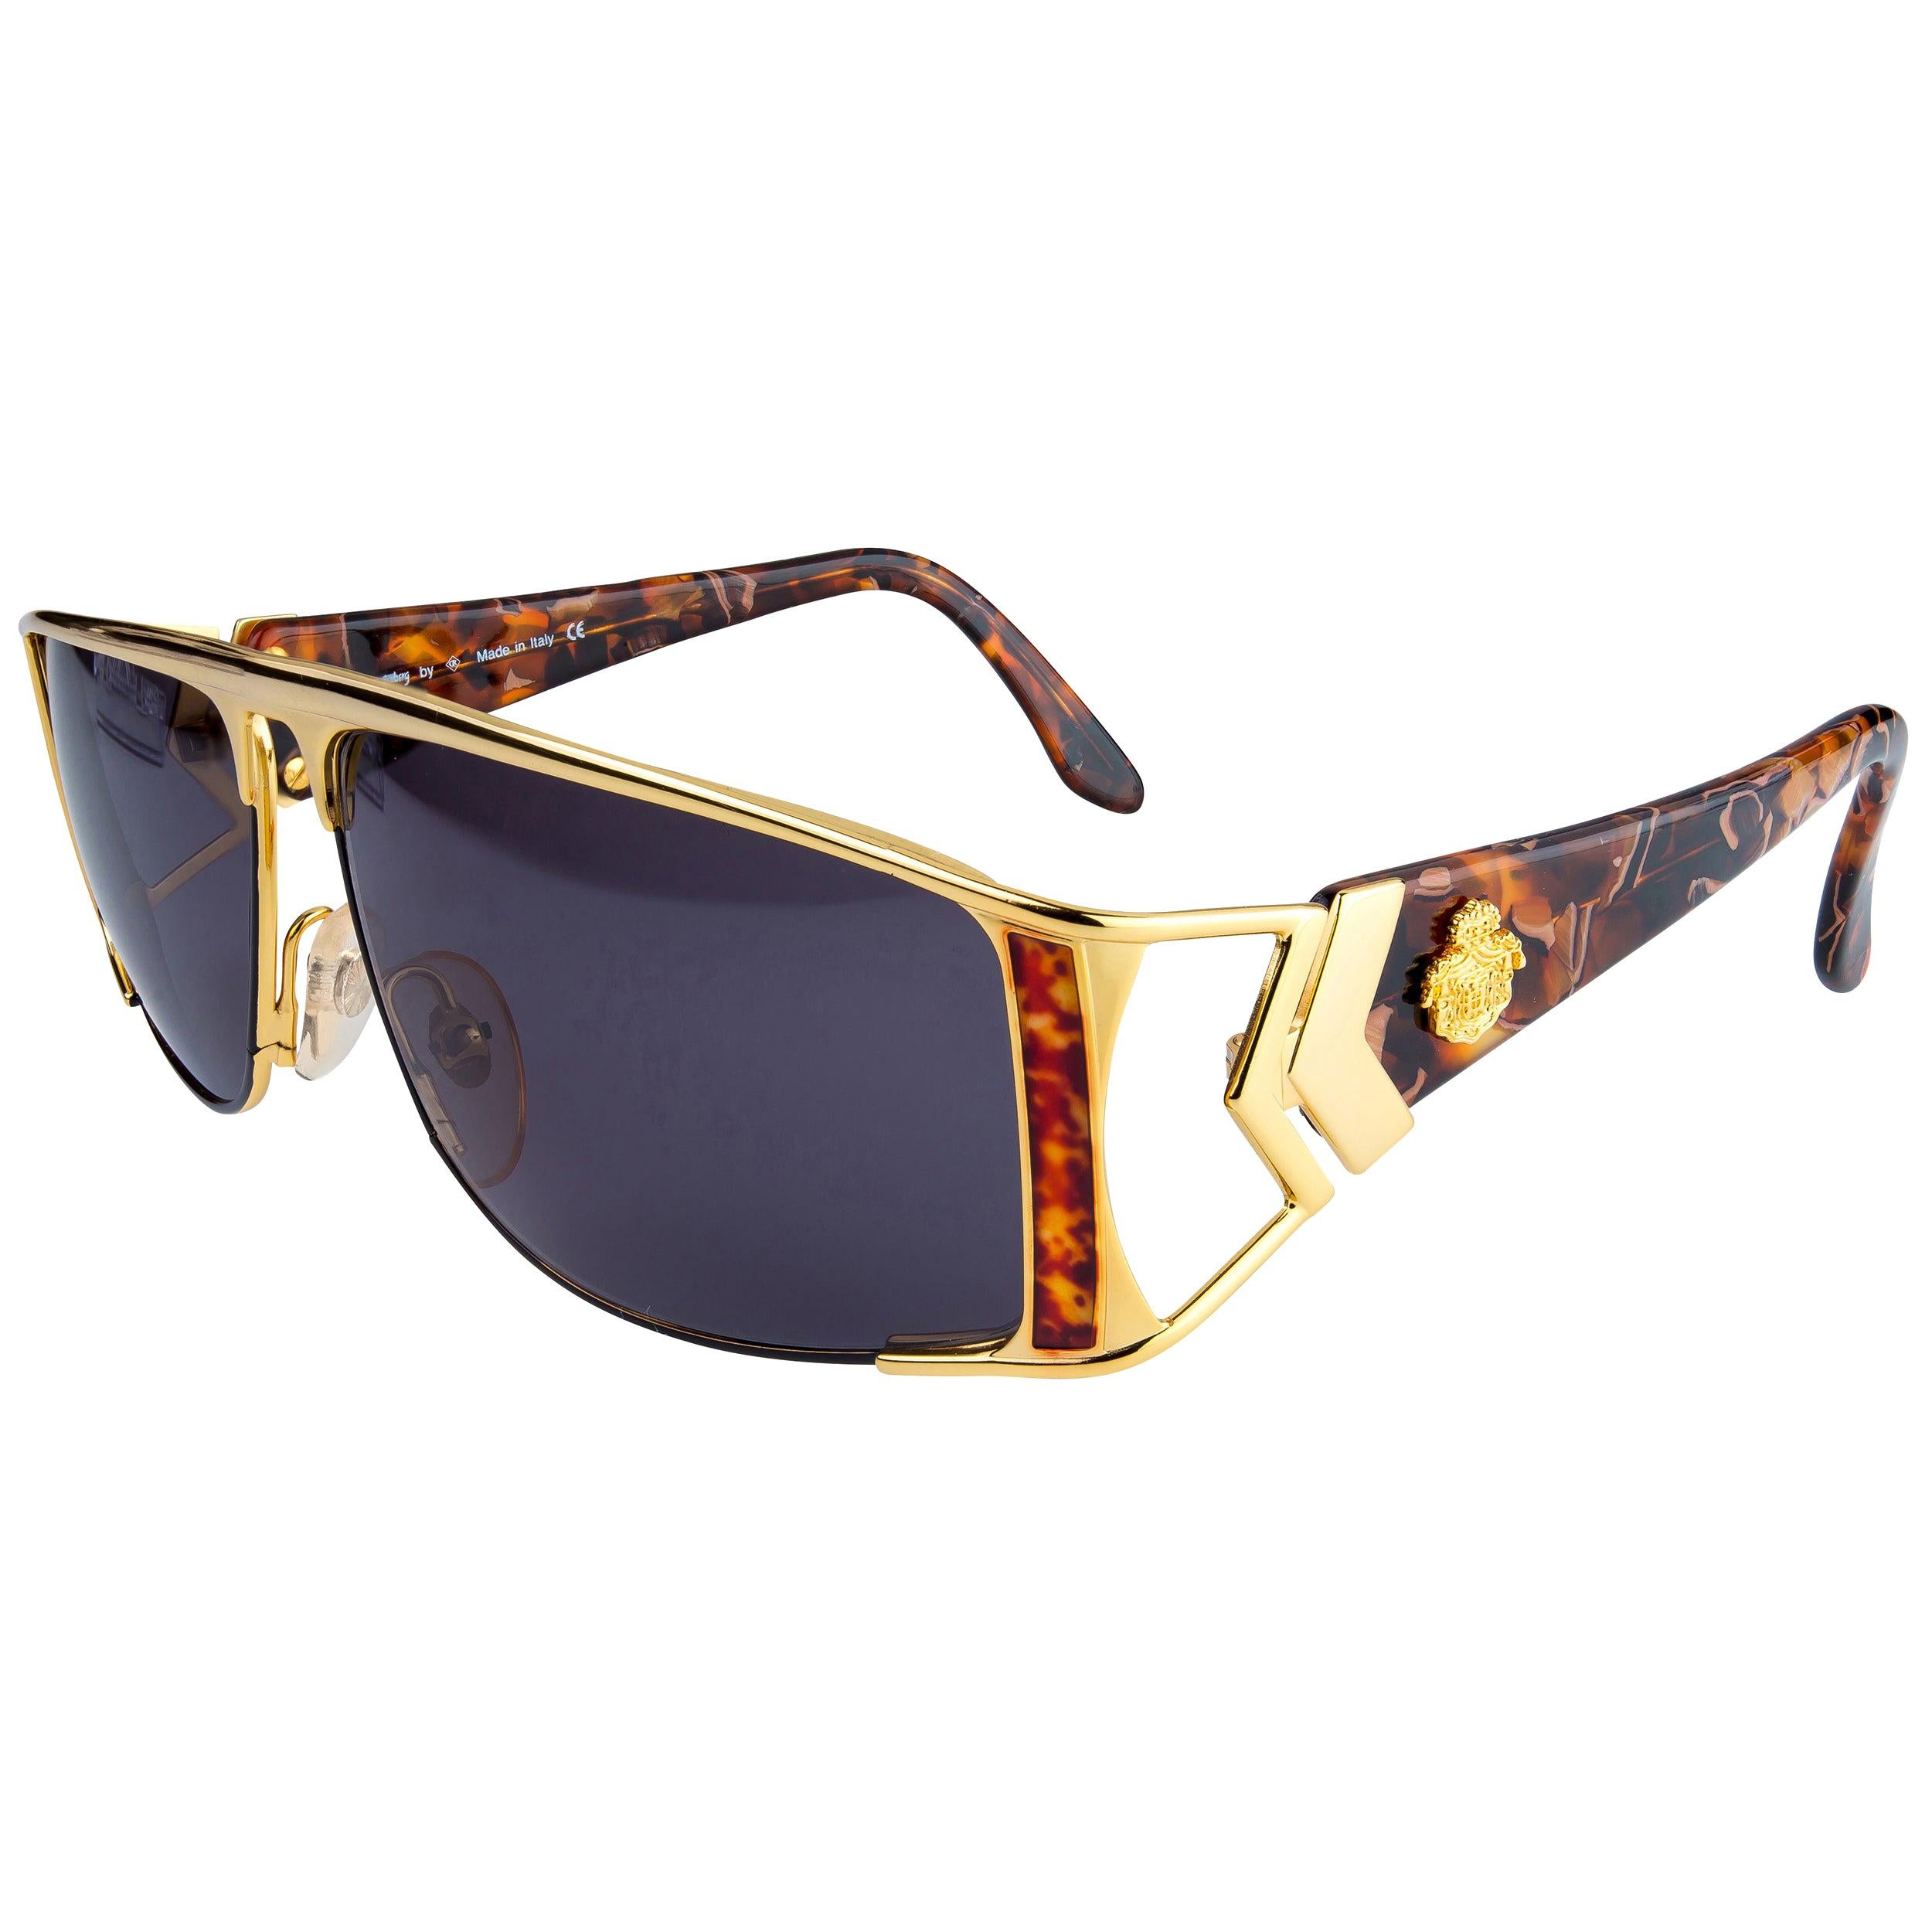 Von Furstenberg gold aviator sunglasses 80s For Sale